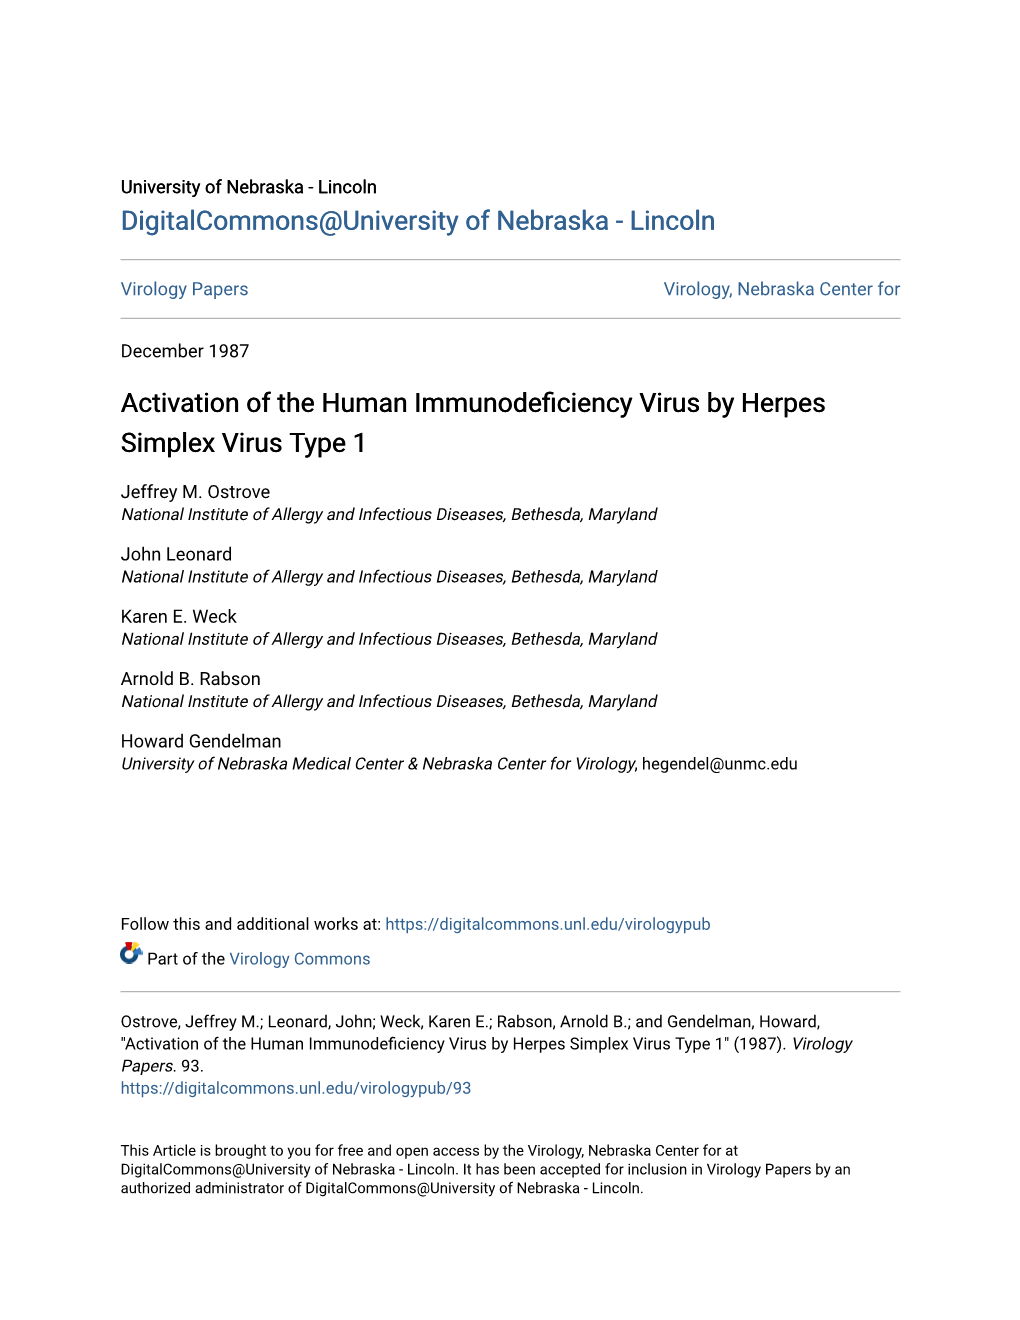 Activation of the Human Immunodeficiency Virus by Herpes Simplex Virus Type 1 JEFFREY M